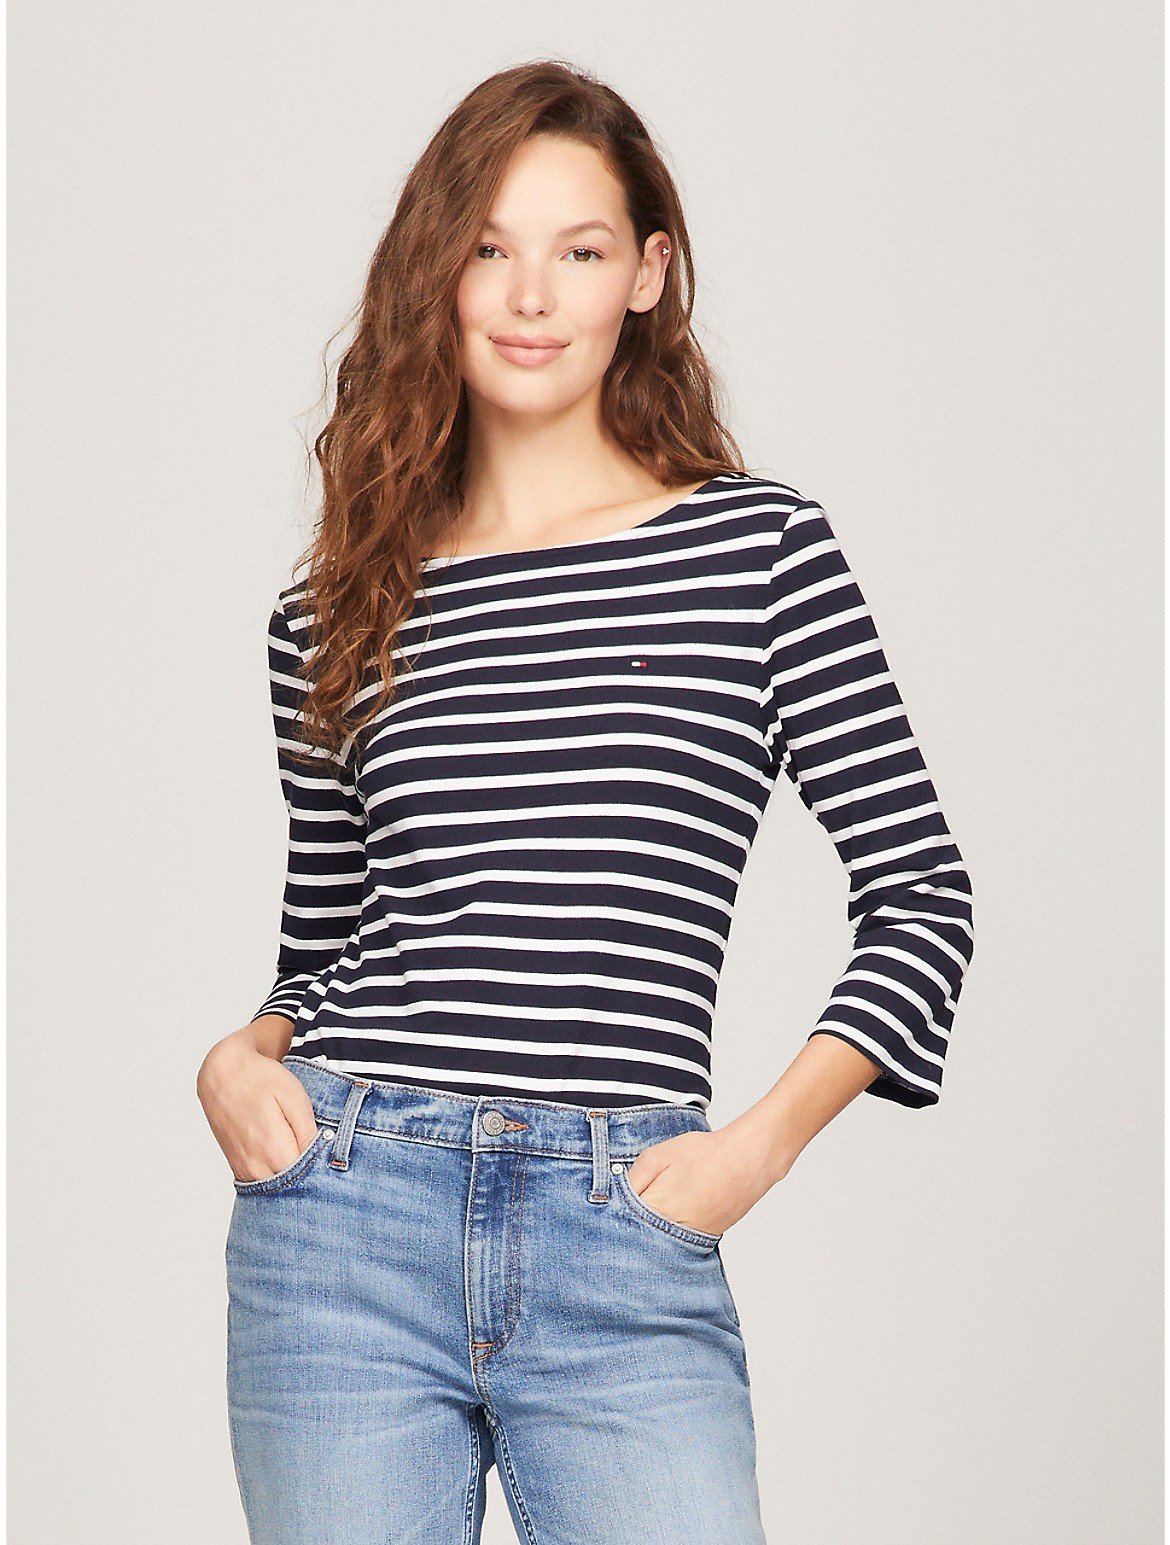 Tommy Hilfiger Women's Stripe Boatneck T-Shirt